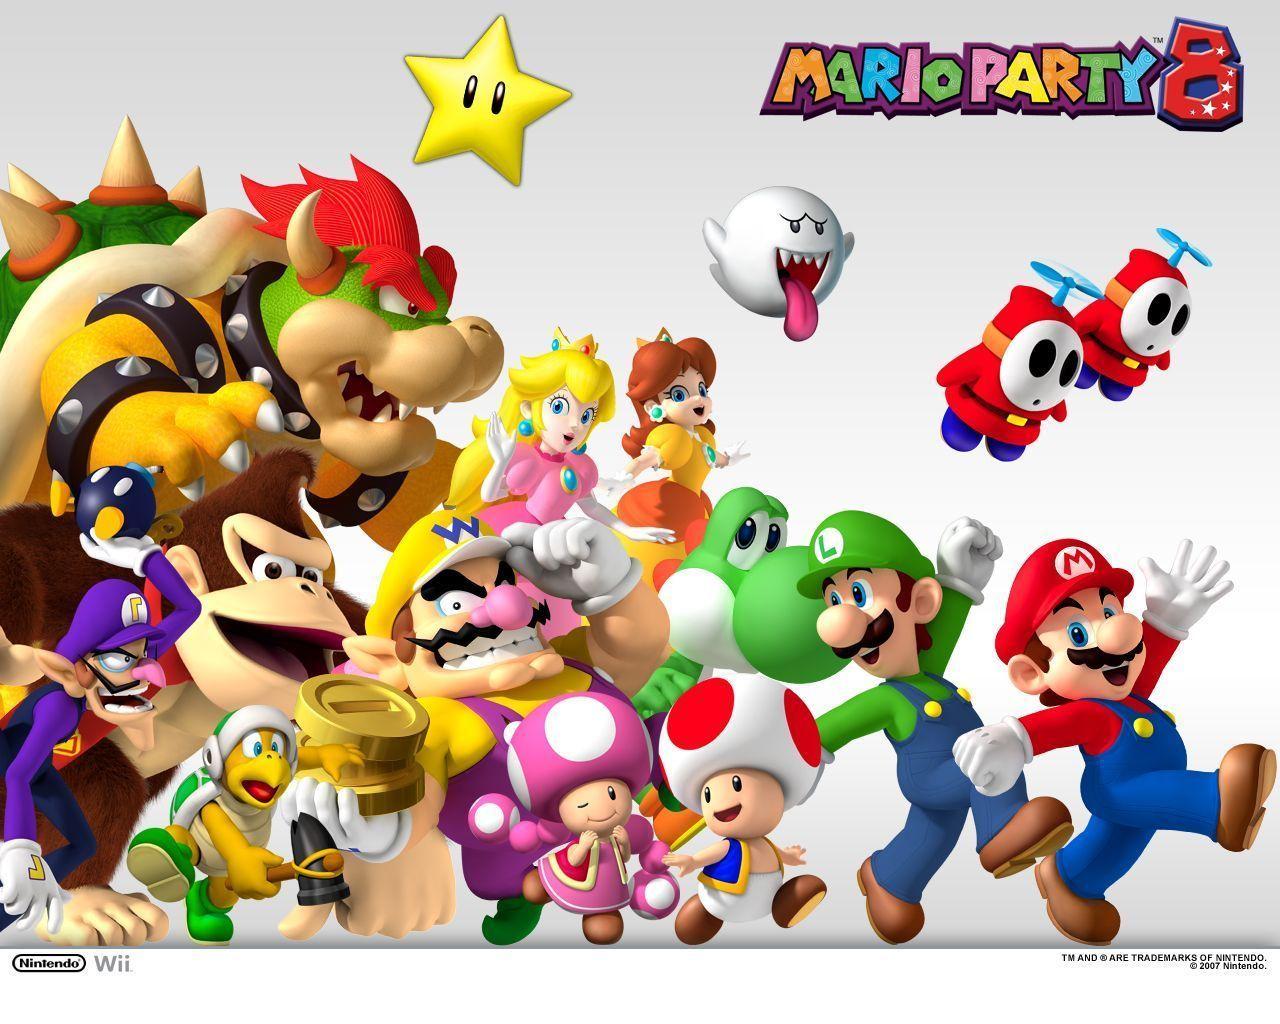 Mario Party 7 Wallpaper by xFlowerstarx on DeviantArt